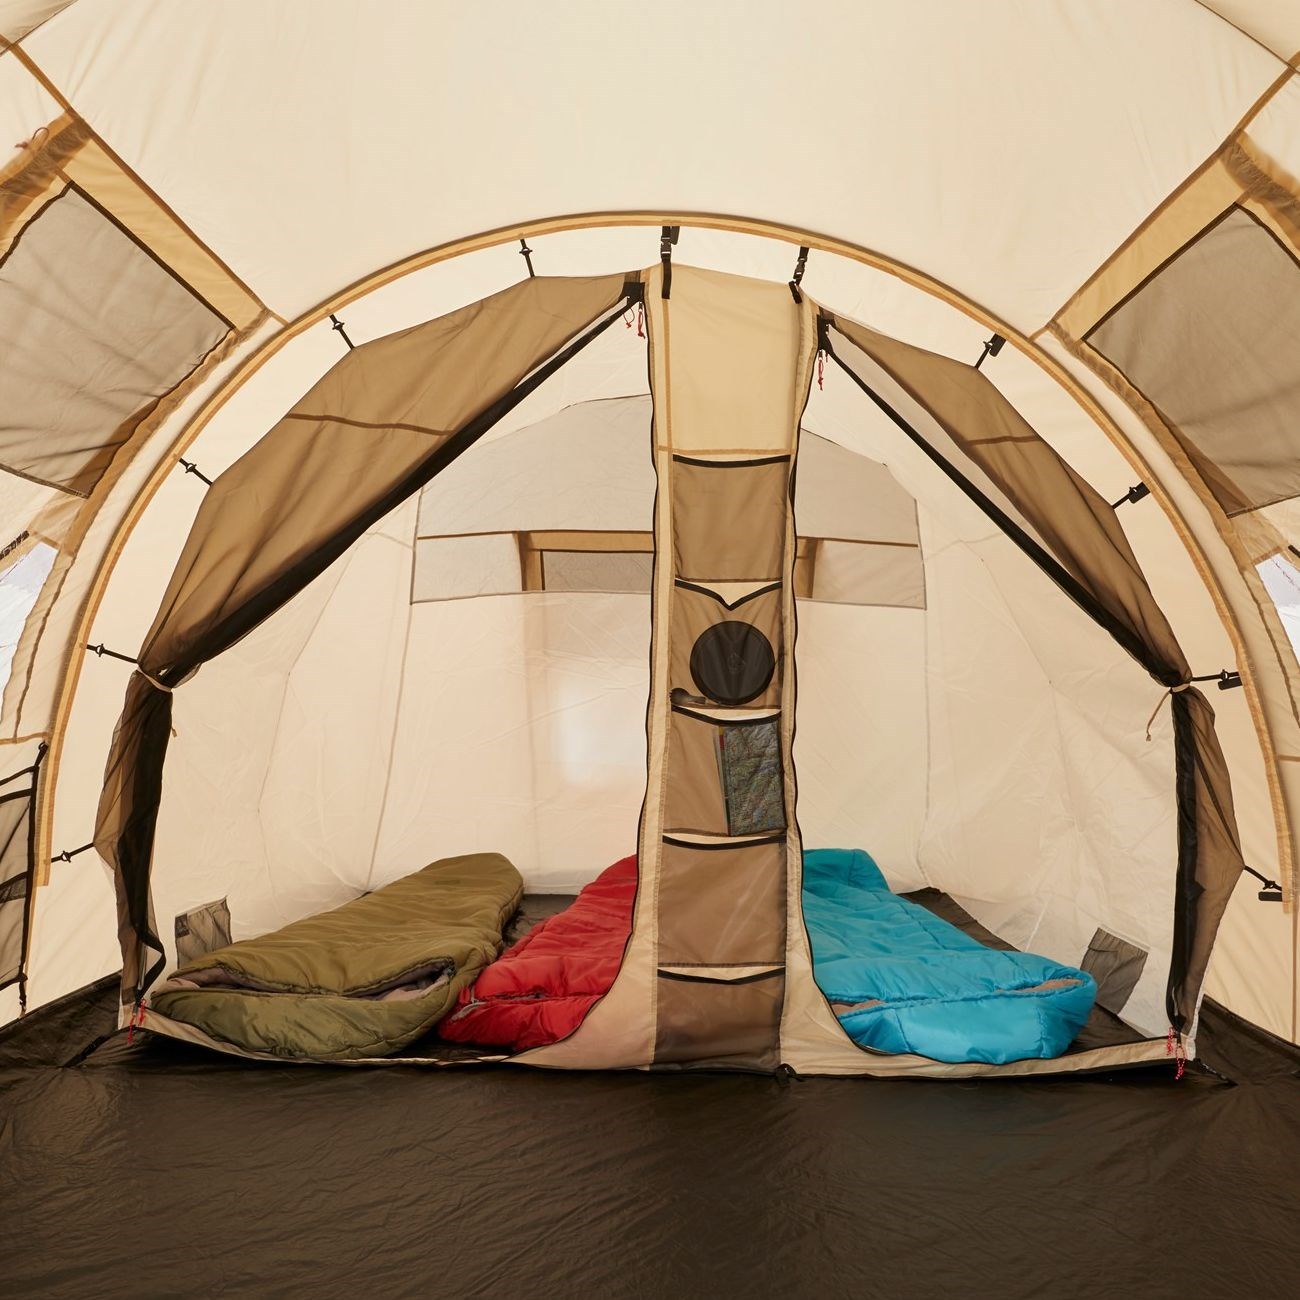 Tent HELENA 3 DESERT GRAND CANYON 330030 L-11